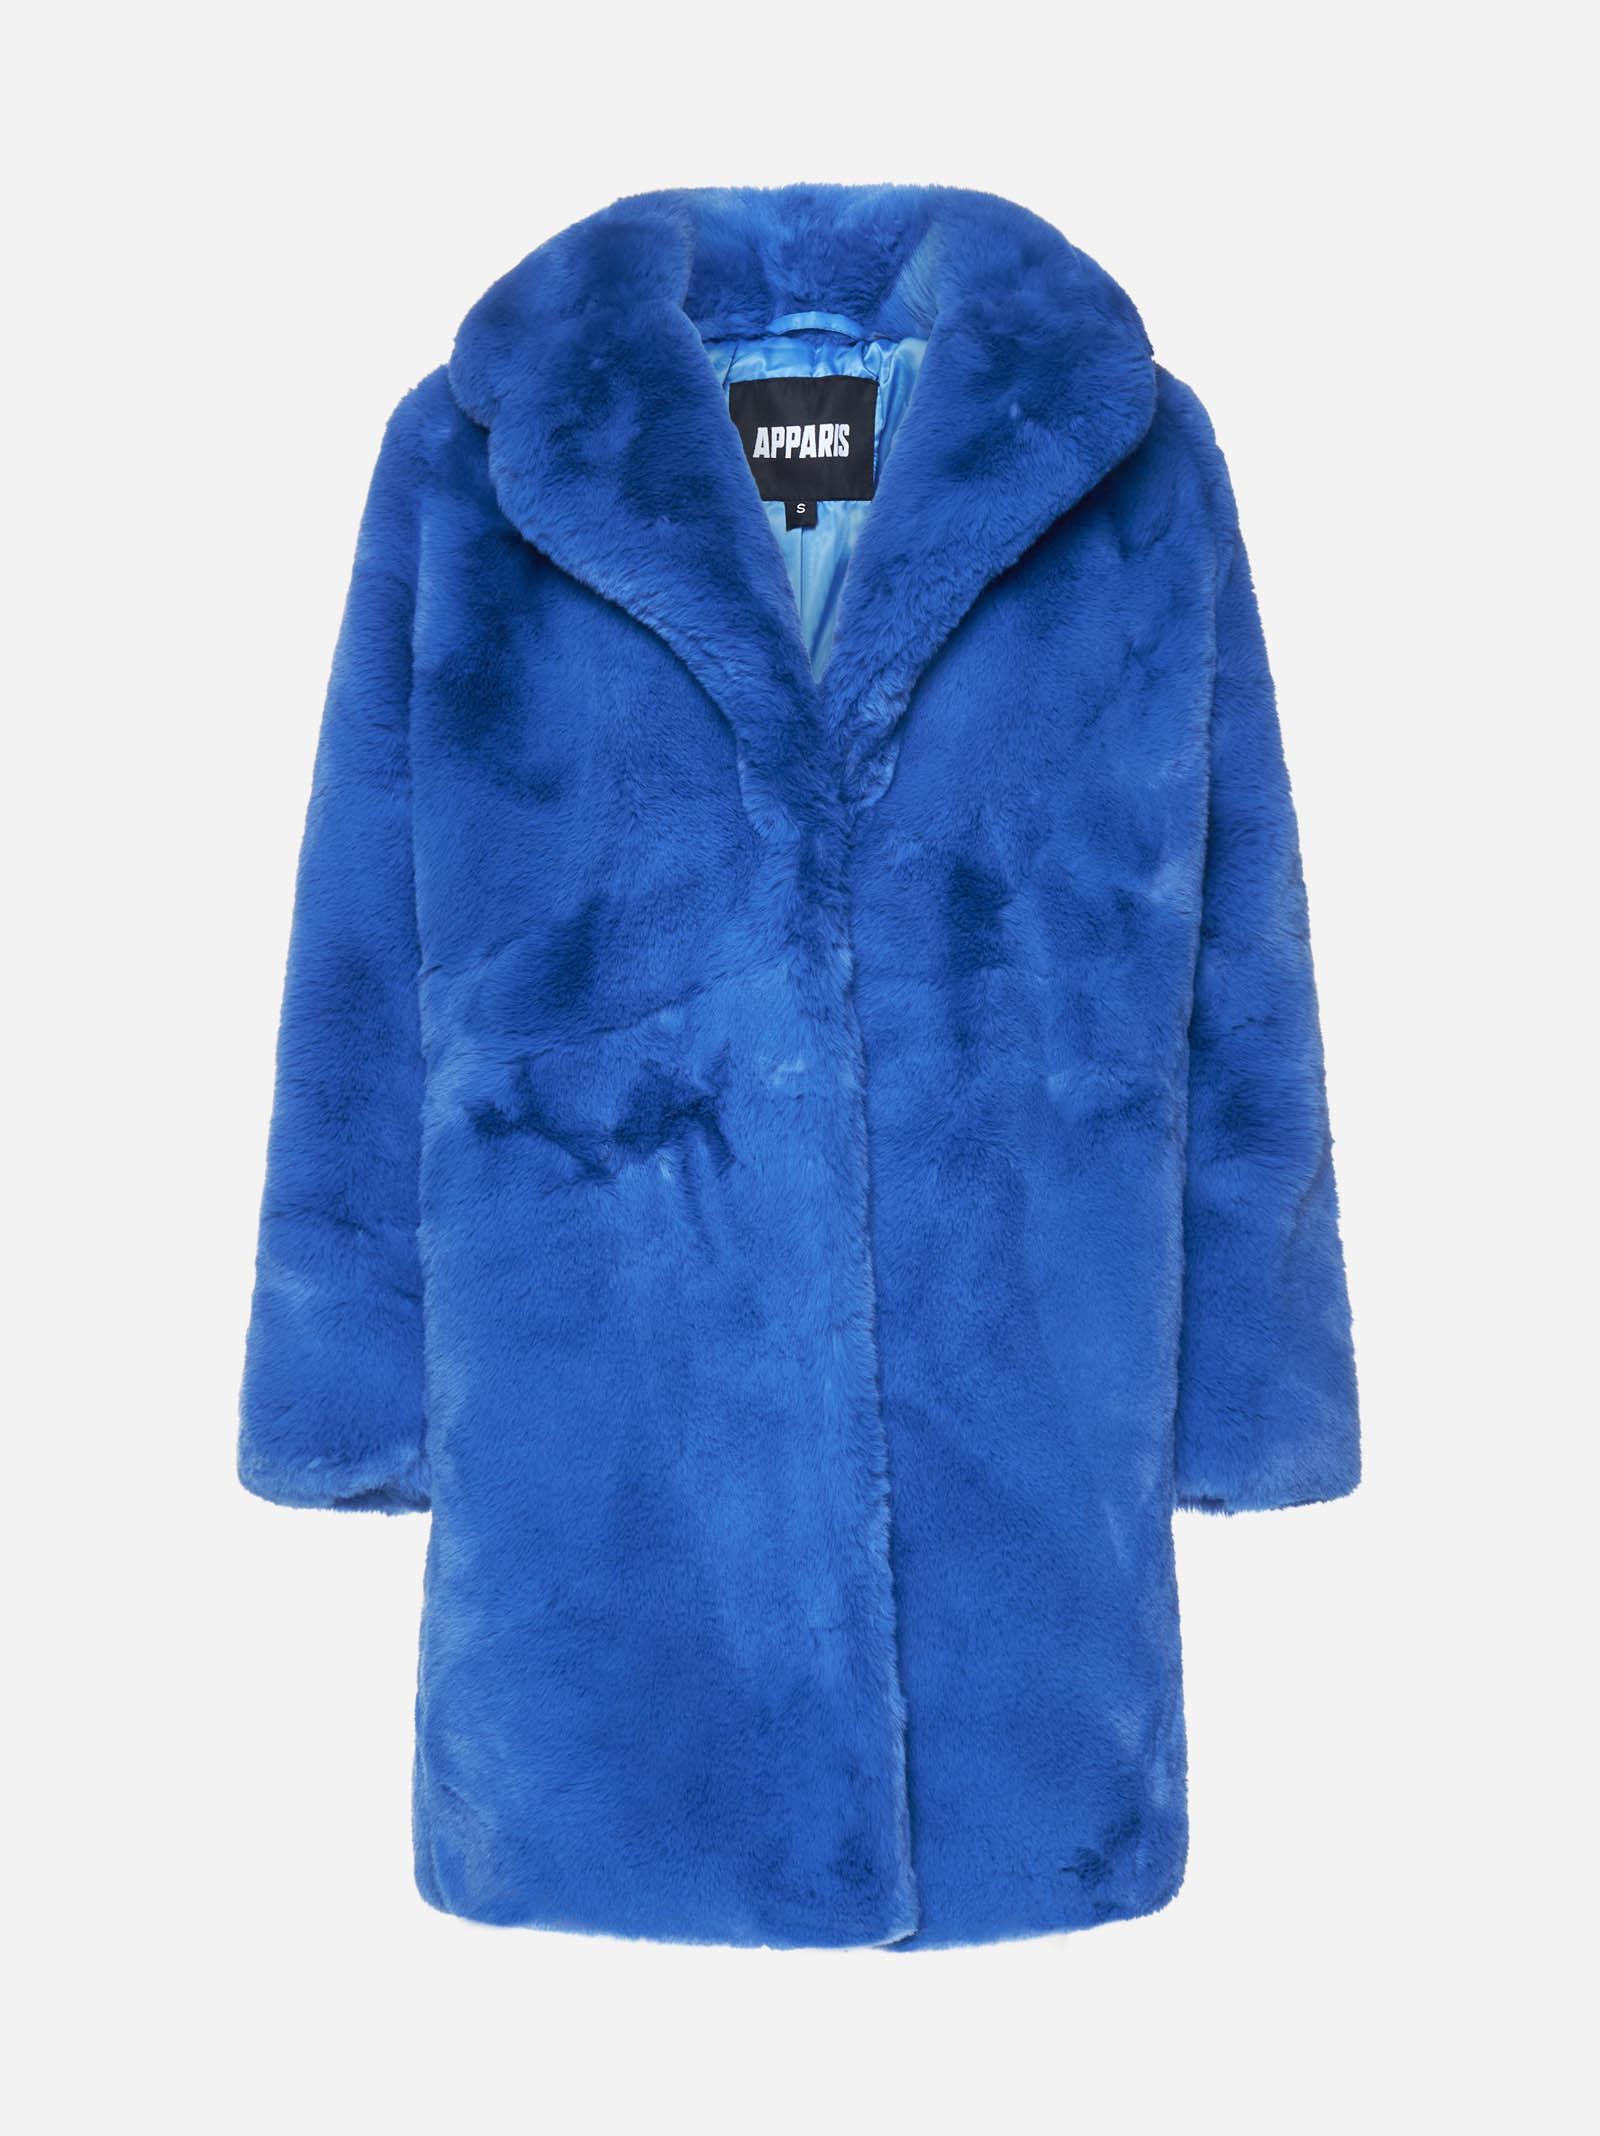 Apparis Stella Faux Fur Coat in Blue | Lyst